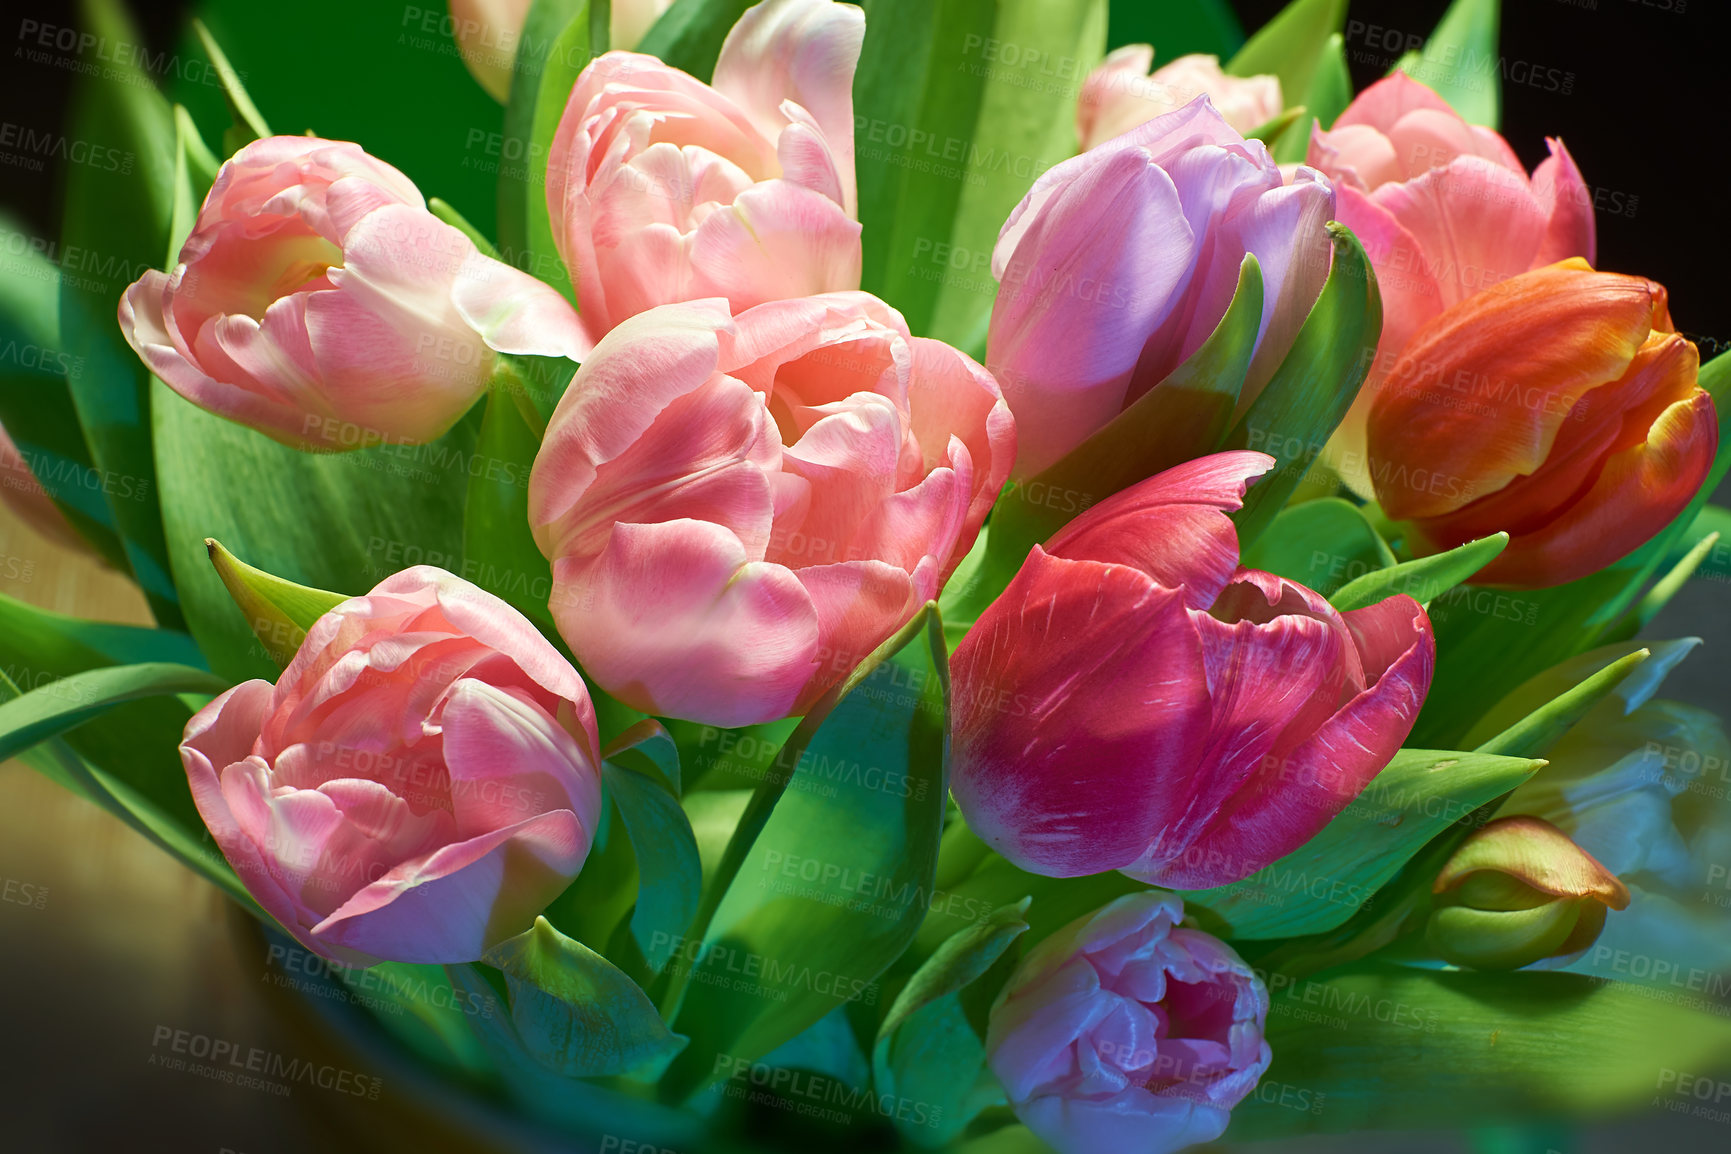 Buy stock photo A beautiful bunch of pink tulips